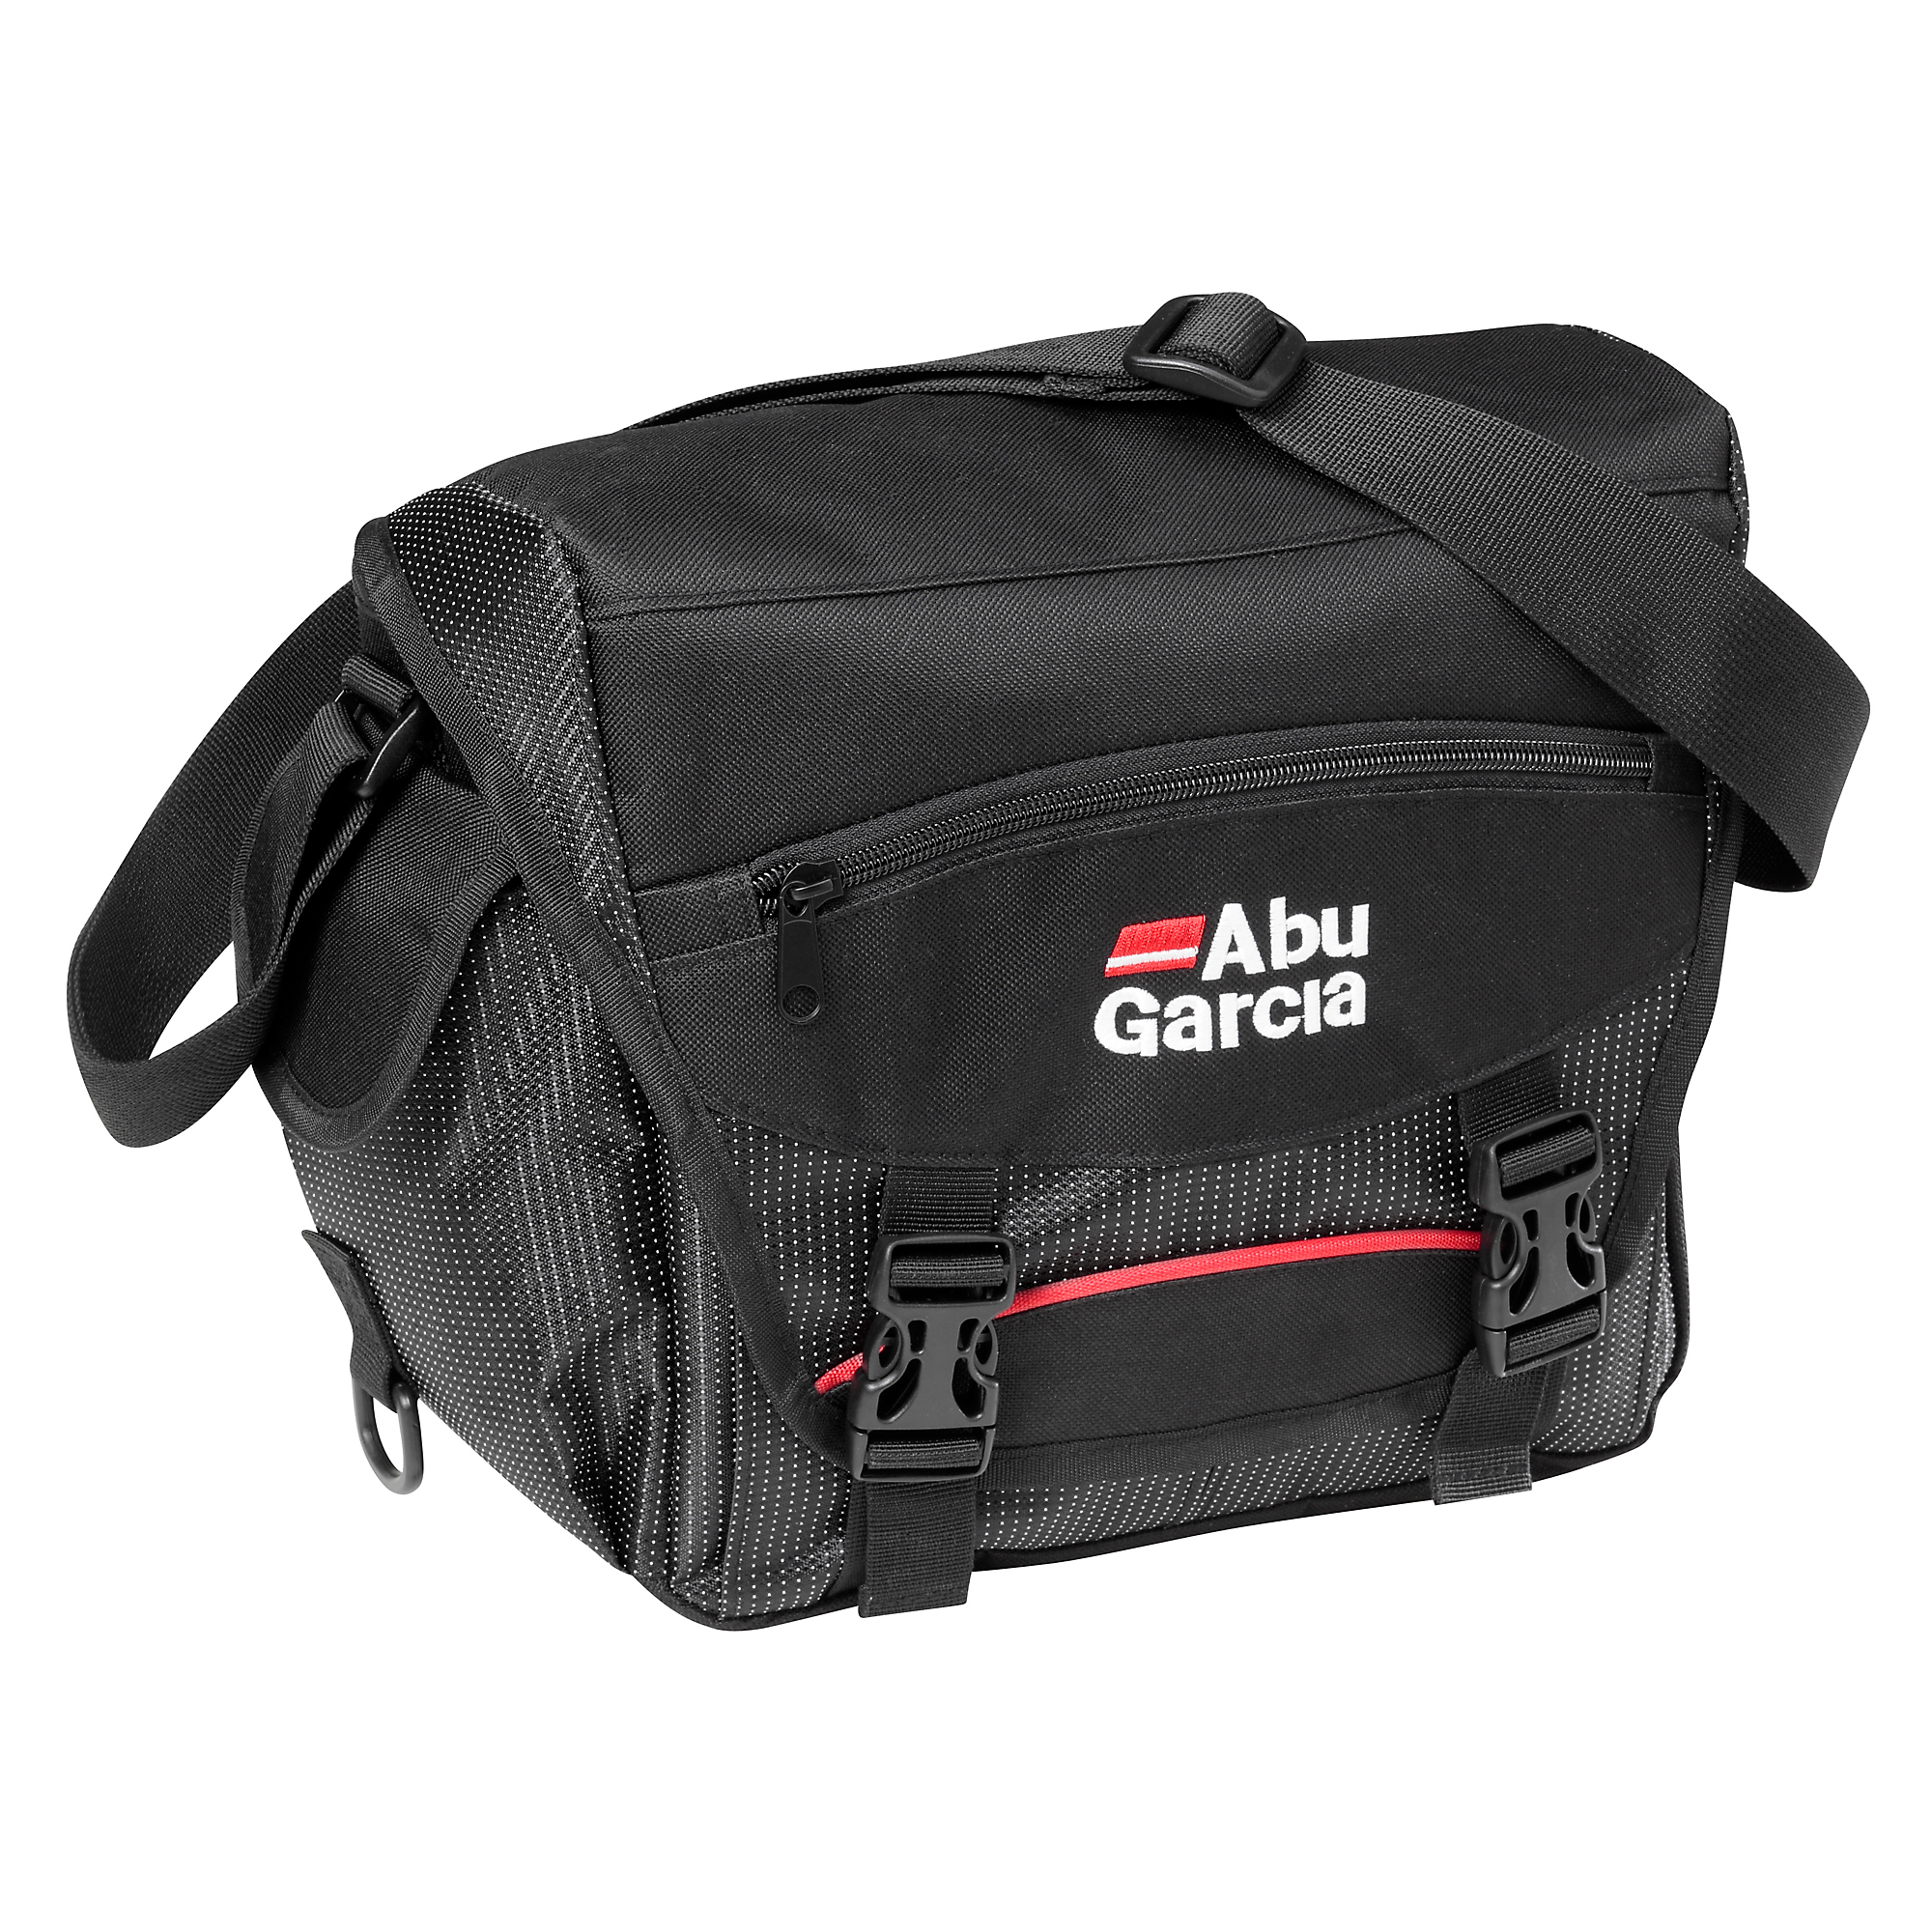 Abu Garcia Compact Game Bag - Black/Red